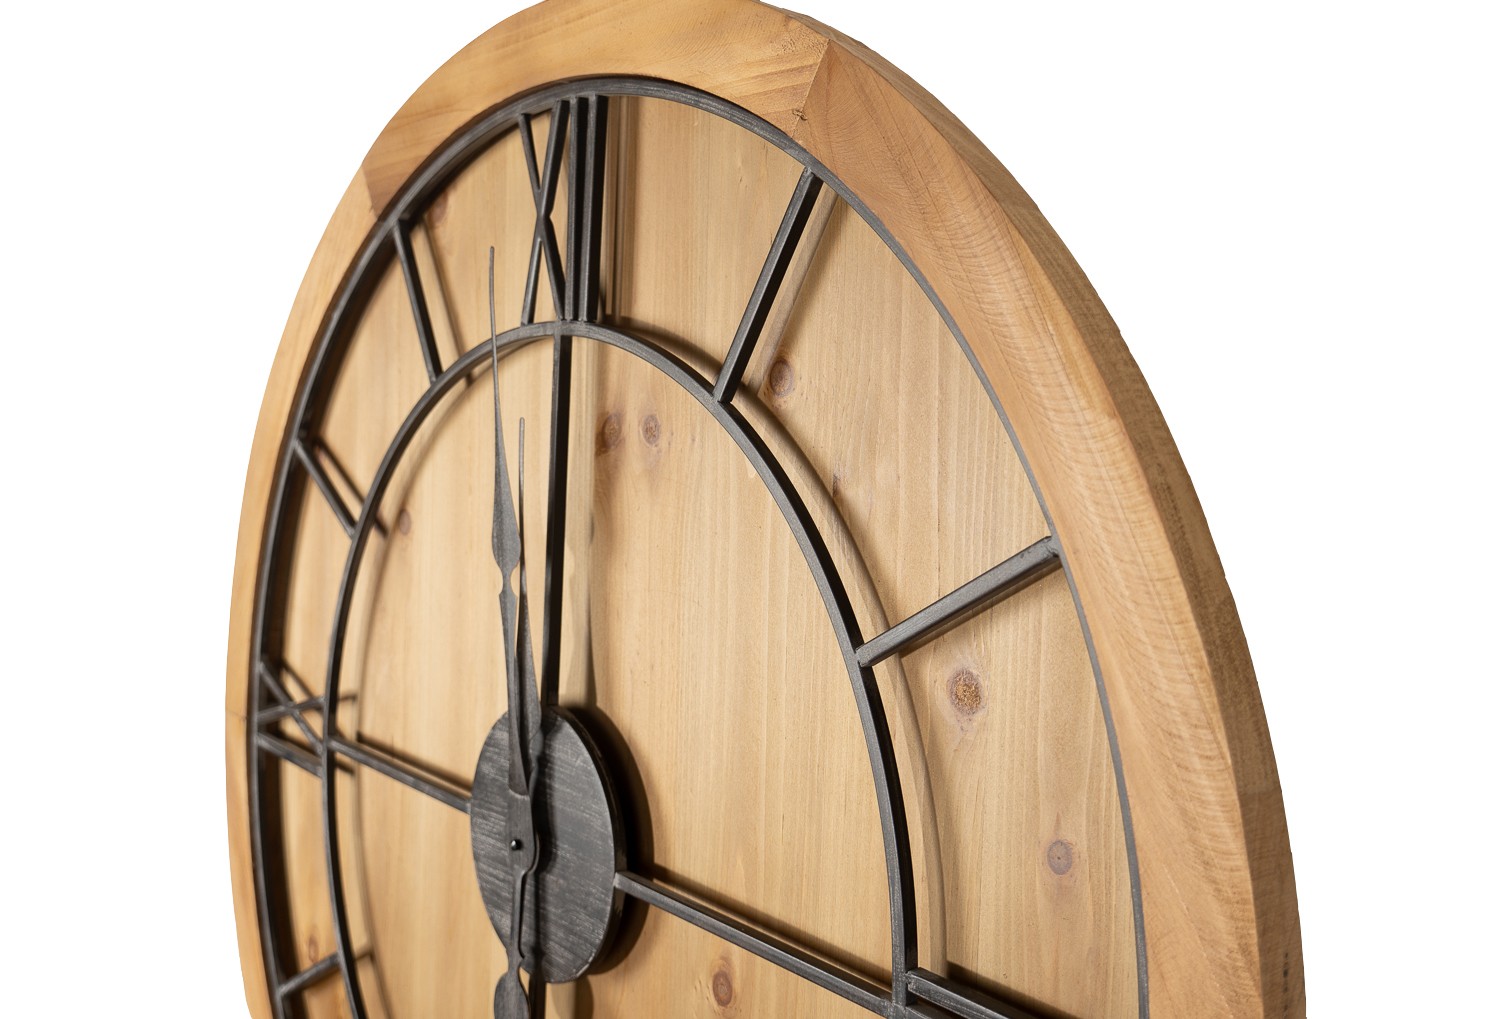 Williston Large Wooden Wall Clock - Image 2